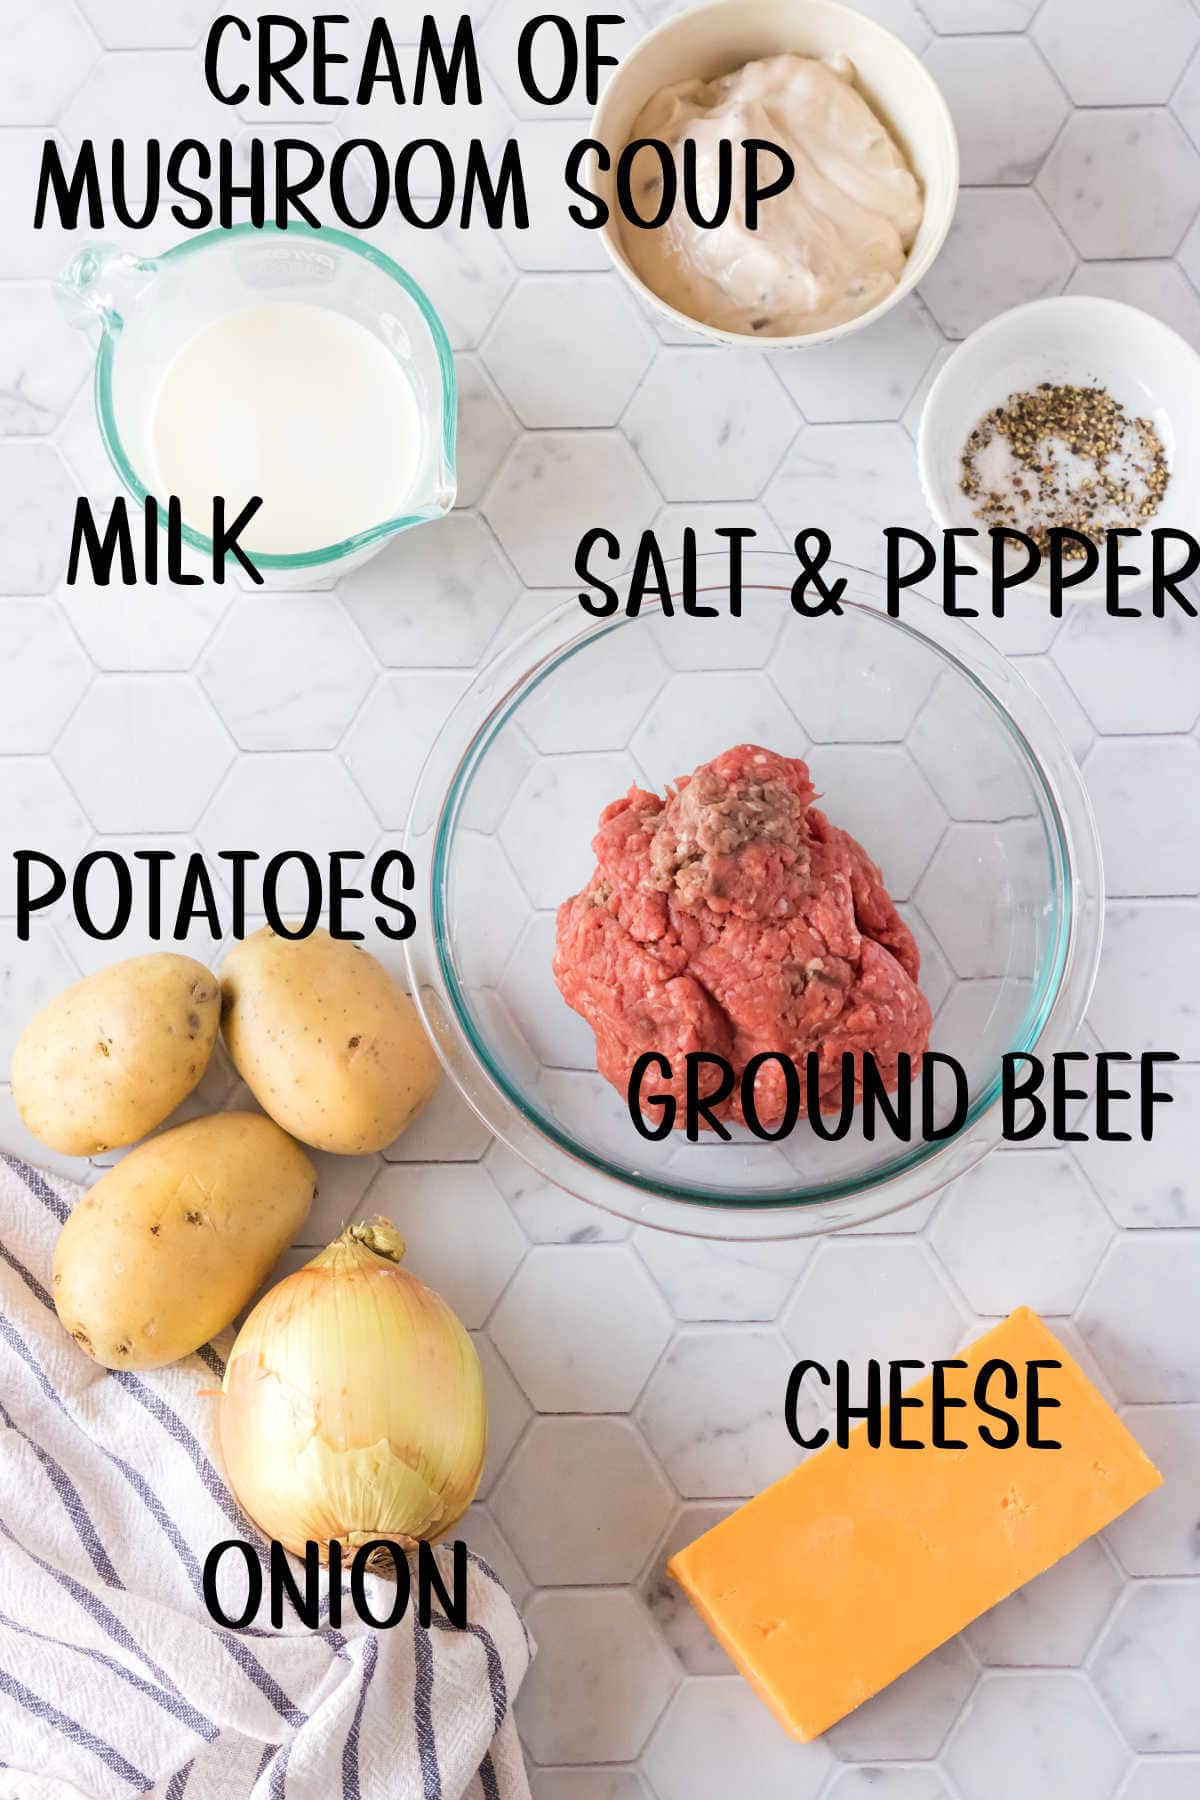 Labeled ingredients list for hamburger potato casserole.